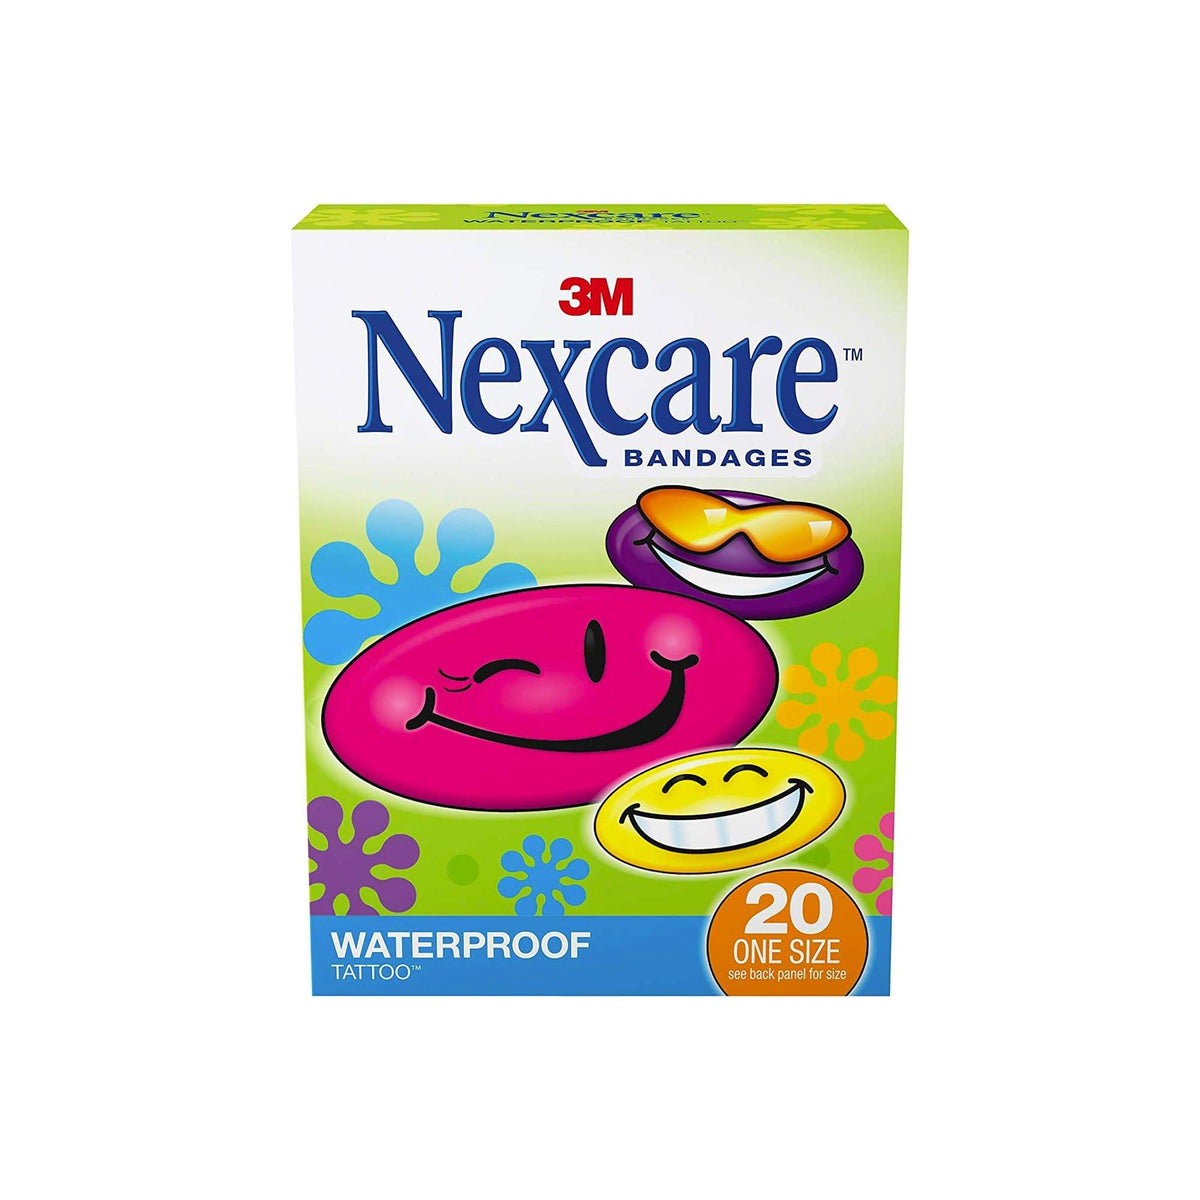 3M Nexcare Waterproof Tattoo Bandages